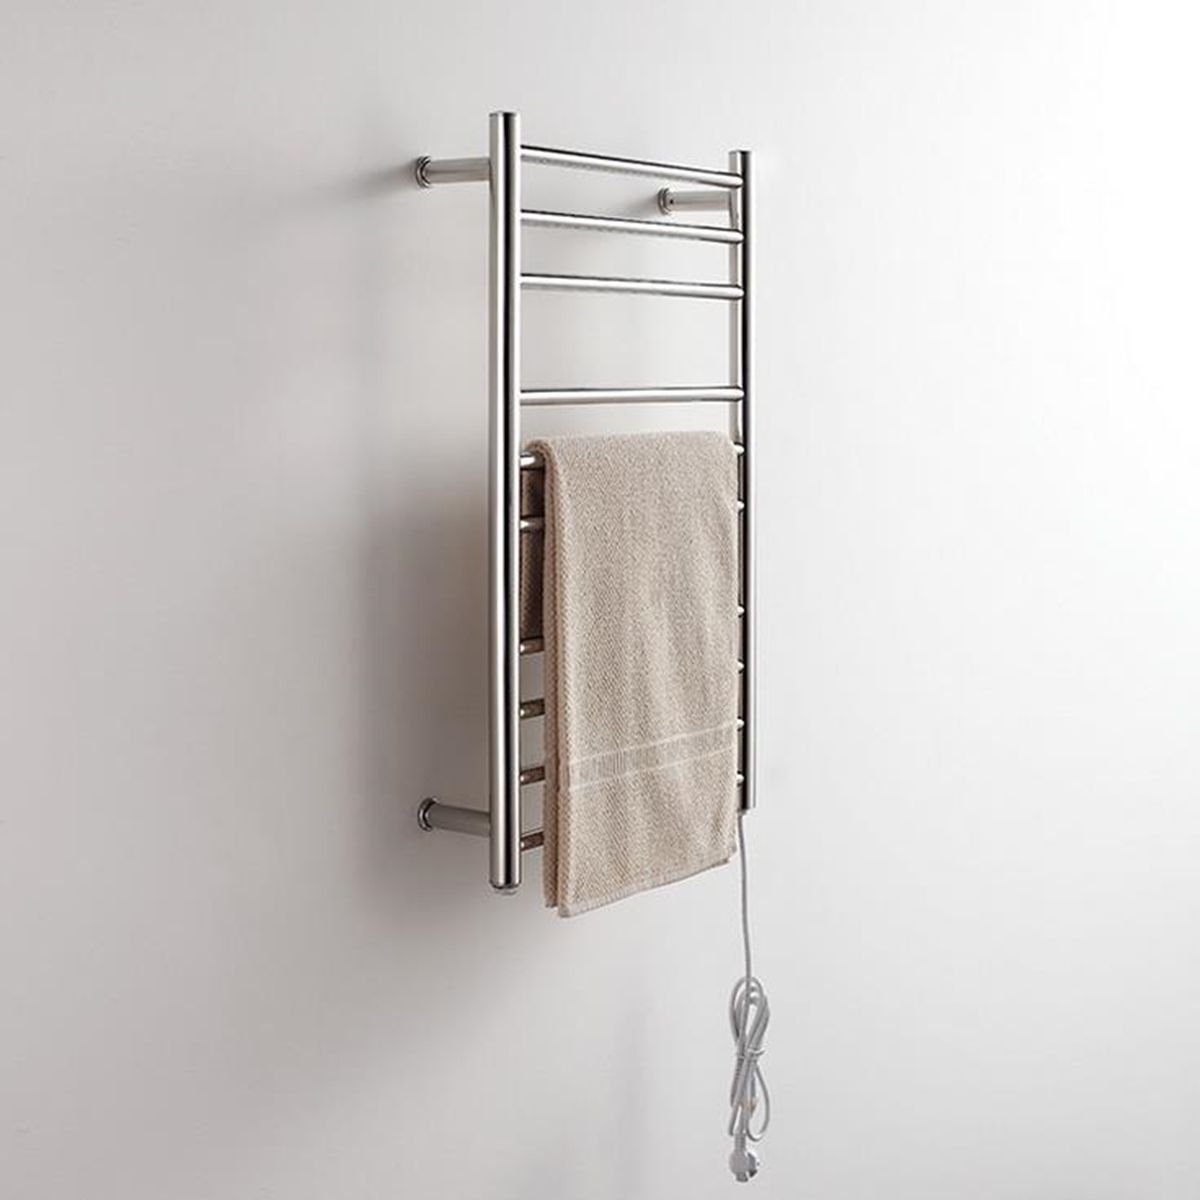 Heated-Towel-Warmer-Holder-Stainless-Steel-Wall-Mounted-Electric-Heated-Towel-Rail-Bathroom-Towel-Ra-1552788